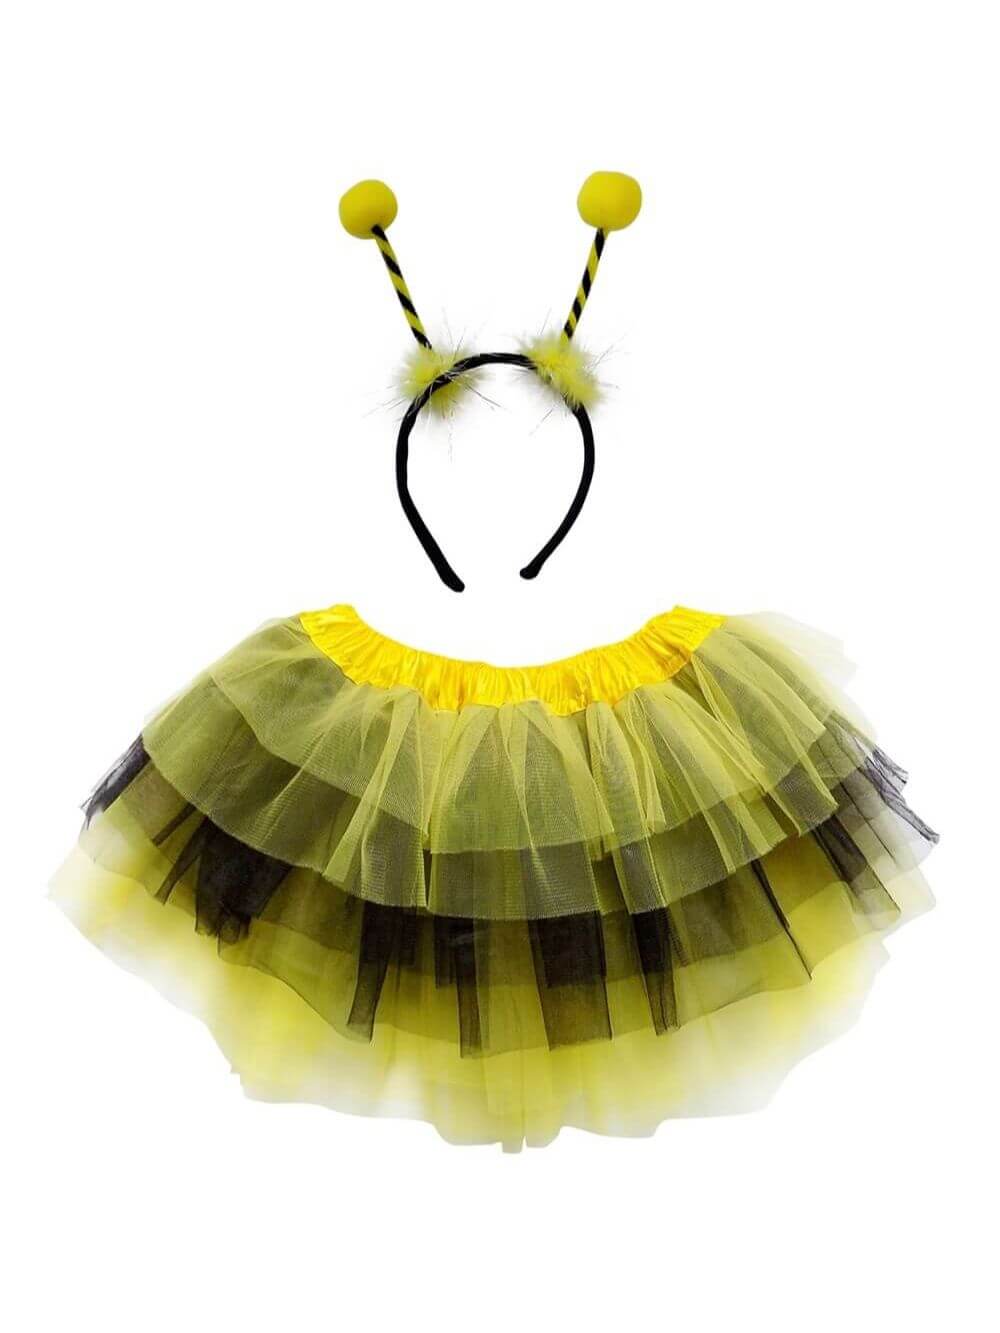 Adult Bee Costume - Black & Yellow Stripe Tutu Skirt & Headband Antenna Set for Adult or Plus Size - Sydney So Sweet